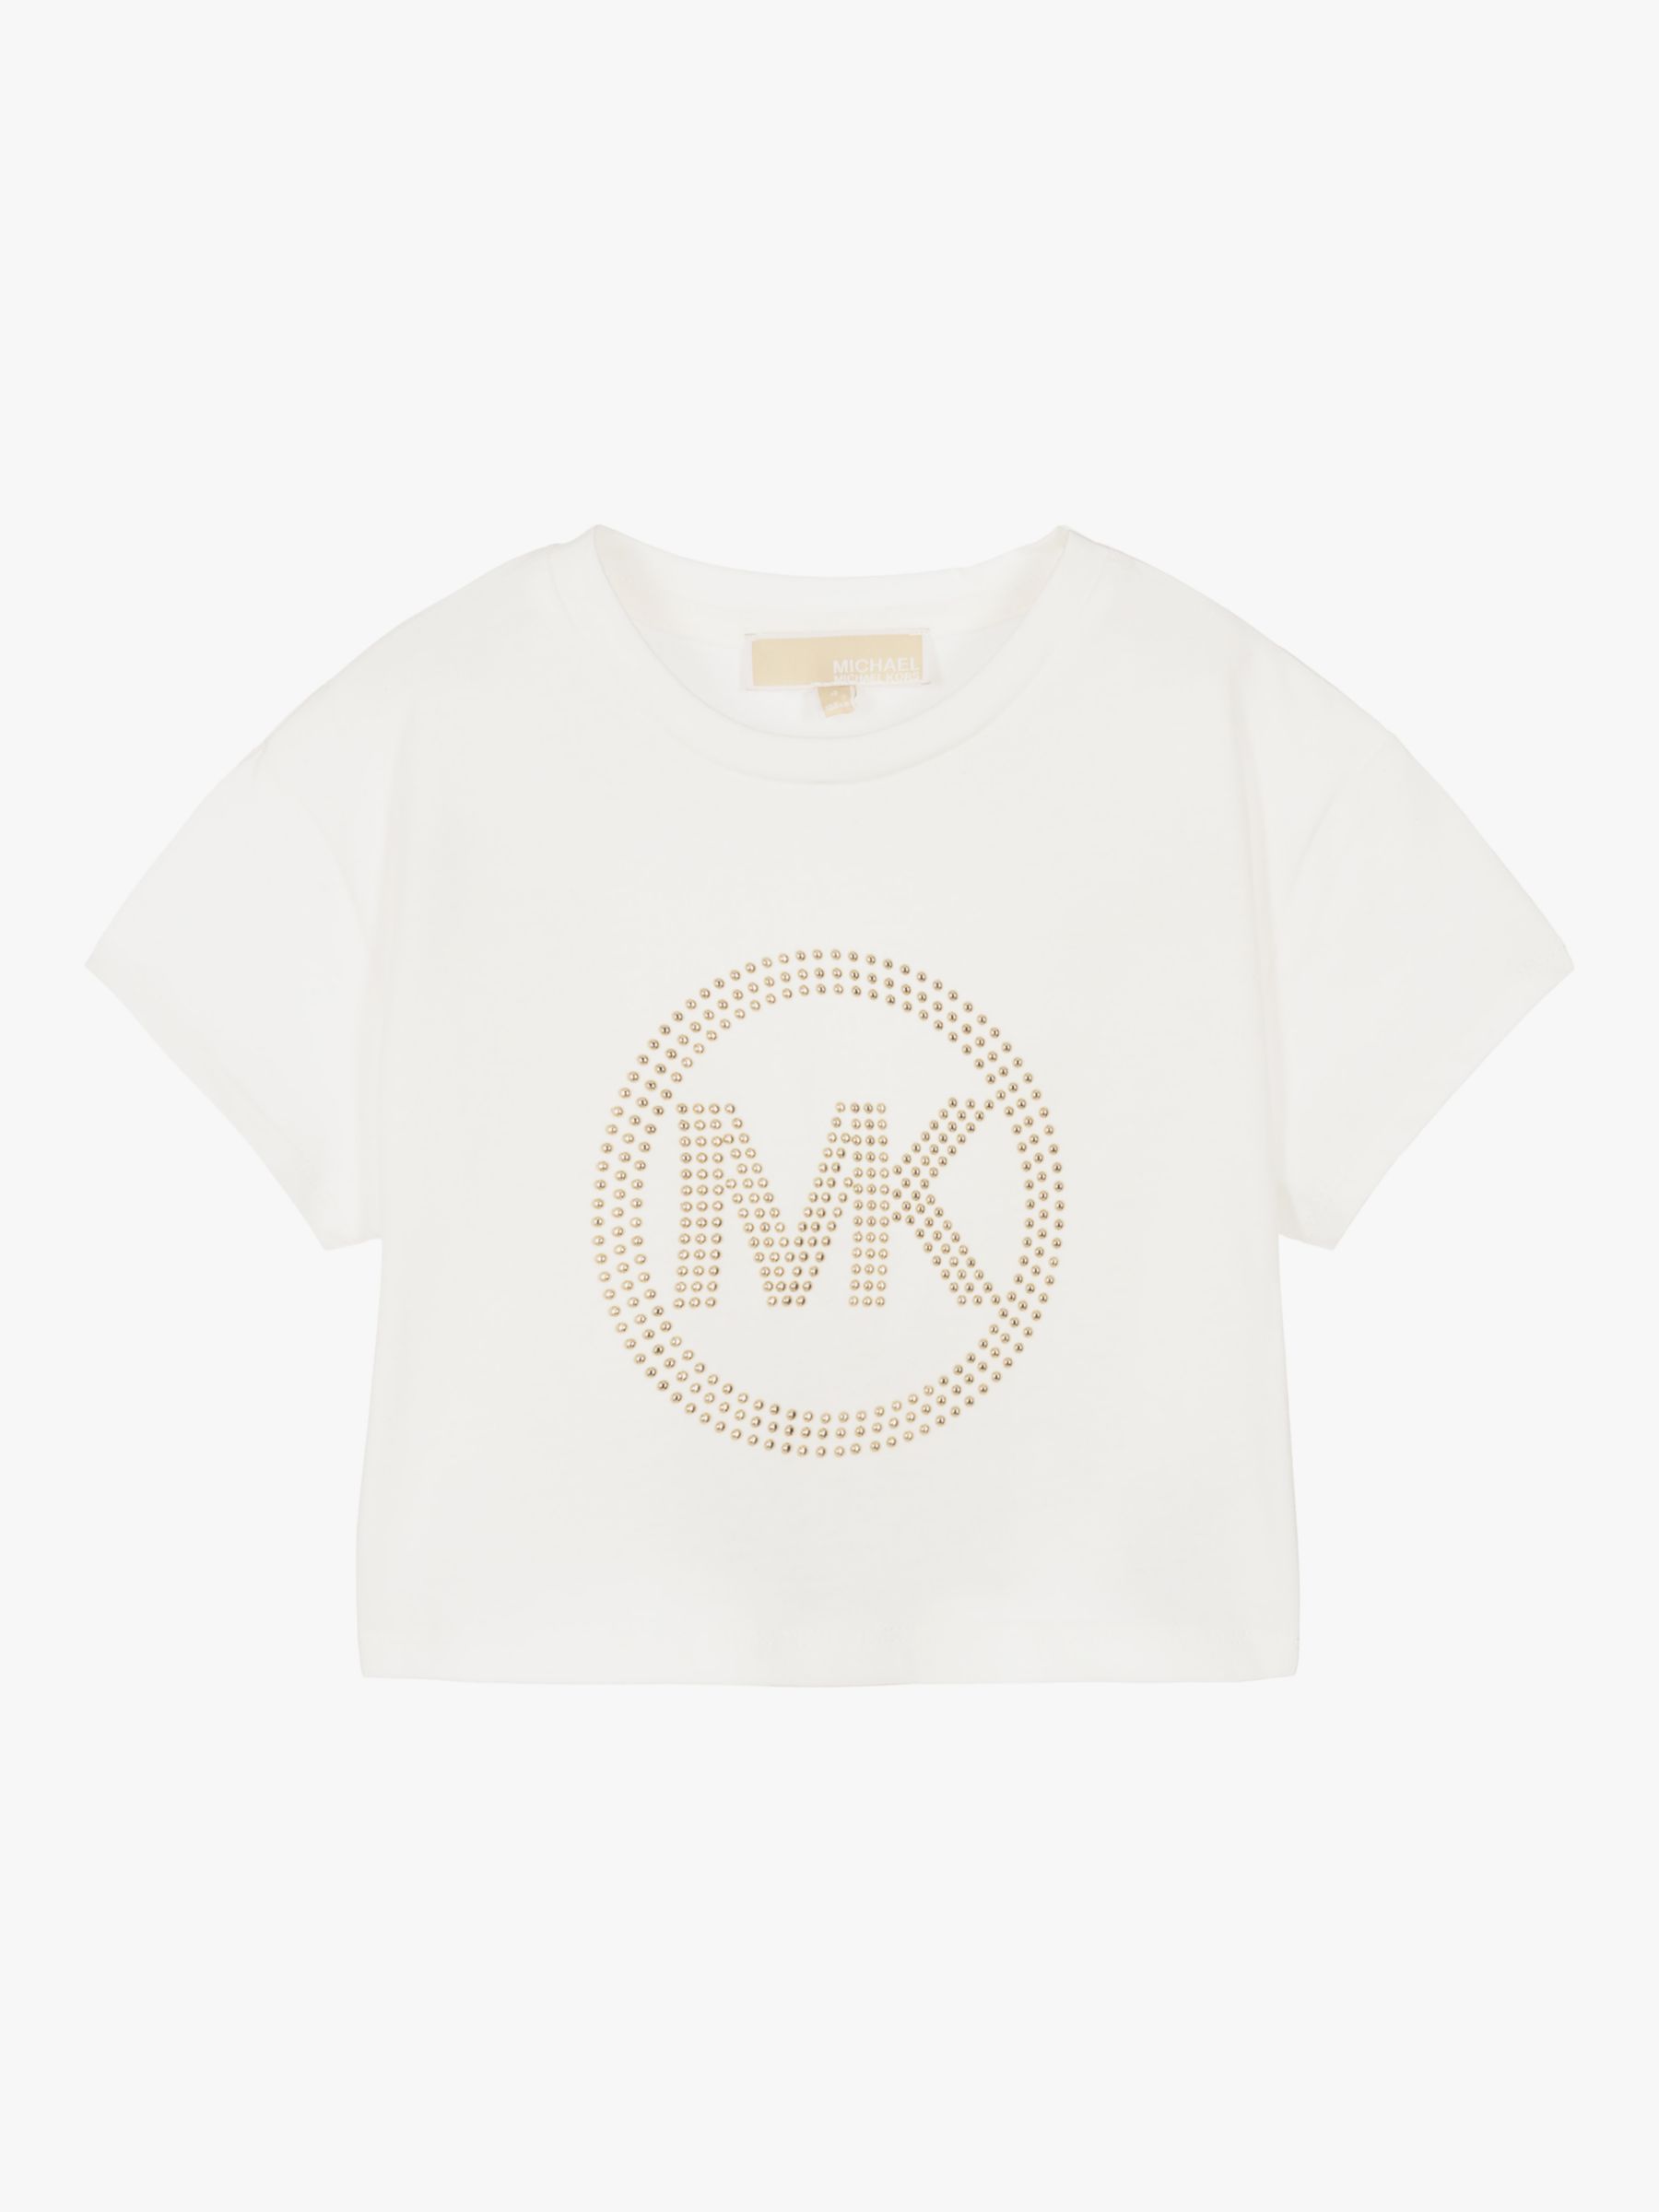 Michael Kors Kids' Stud Logo T-Shirt, Off White at John Lewis & Partners